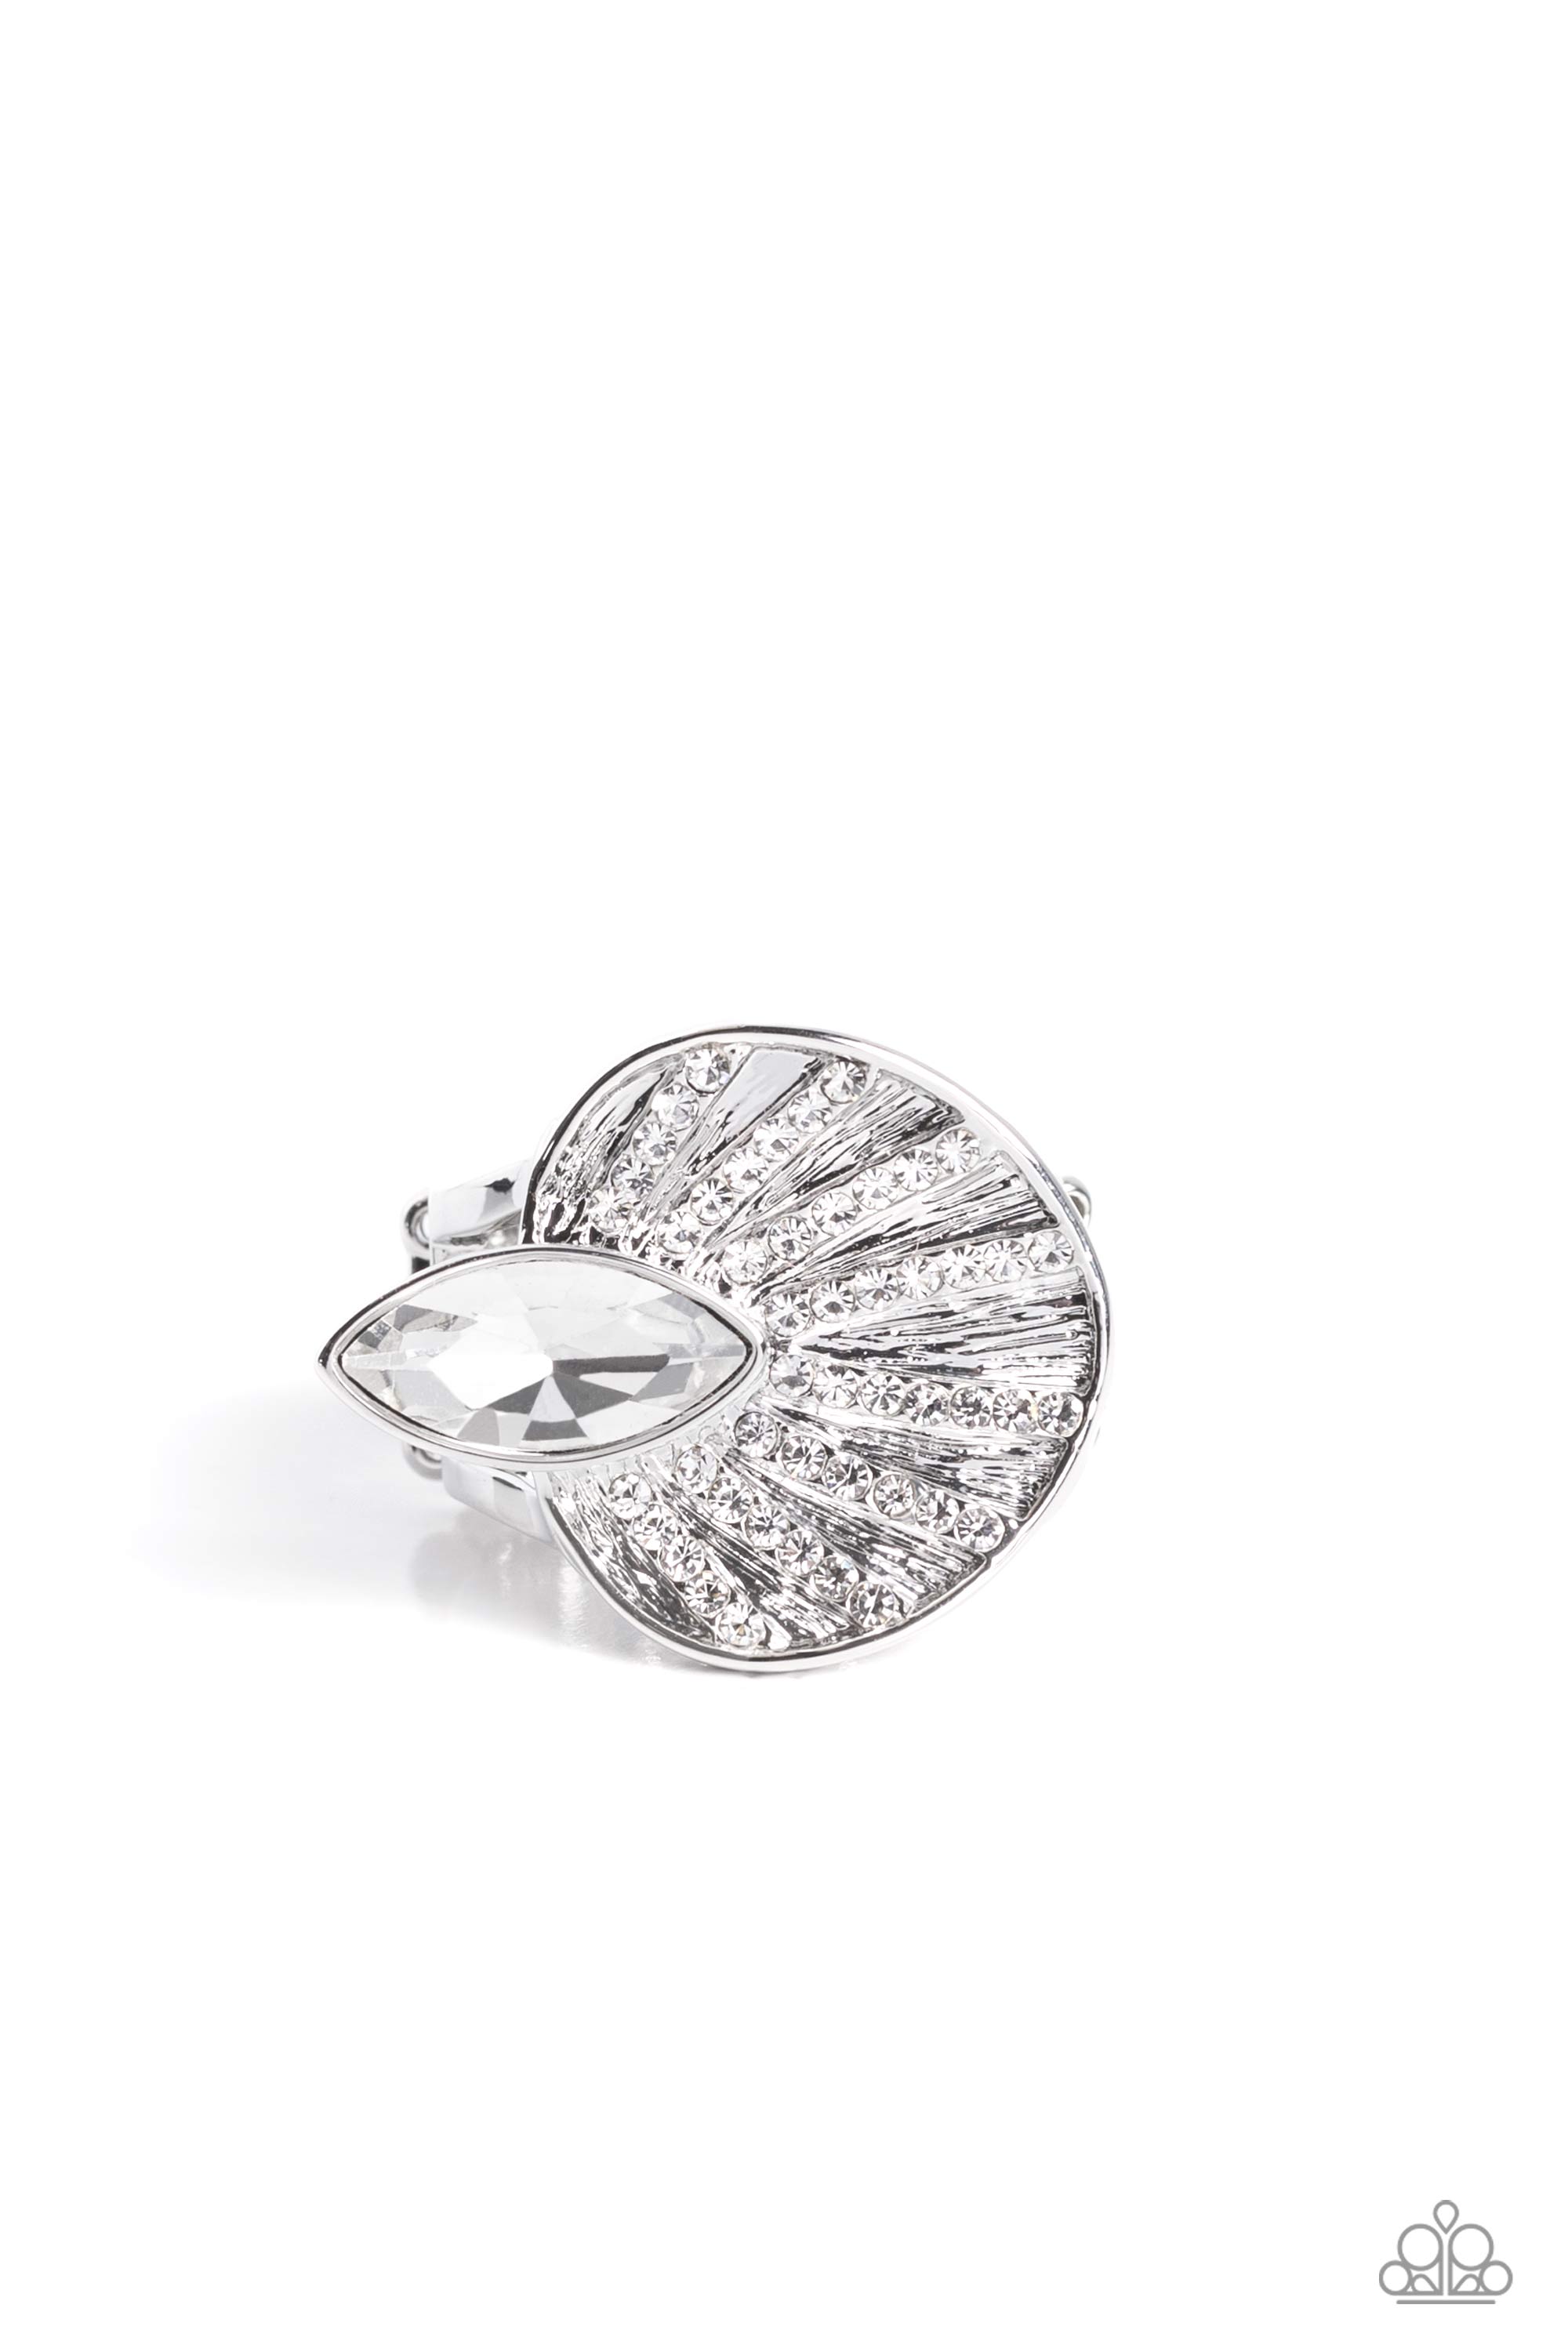 Fan Dance Dazzle White Rhinestone Ring - Paparazzi Accessories- lightbox - CarasShop.com - $5 Jewelry by Cara Jewels